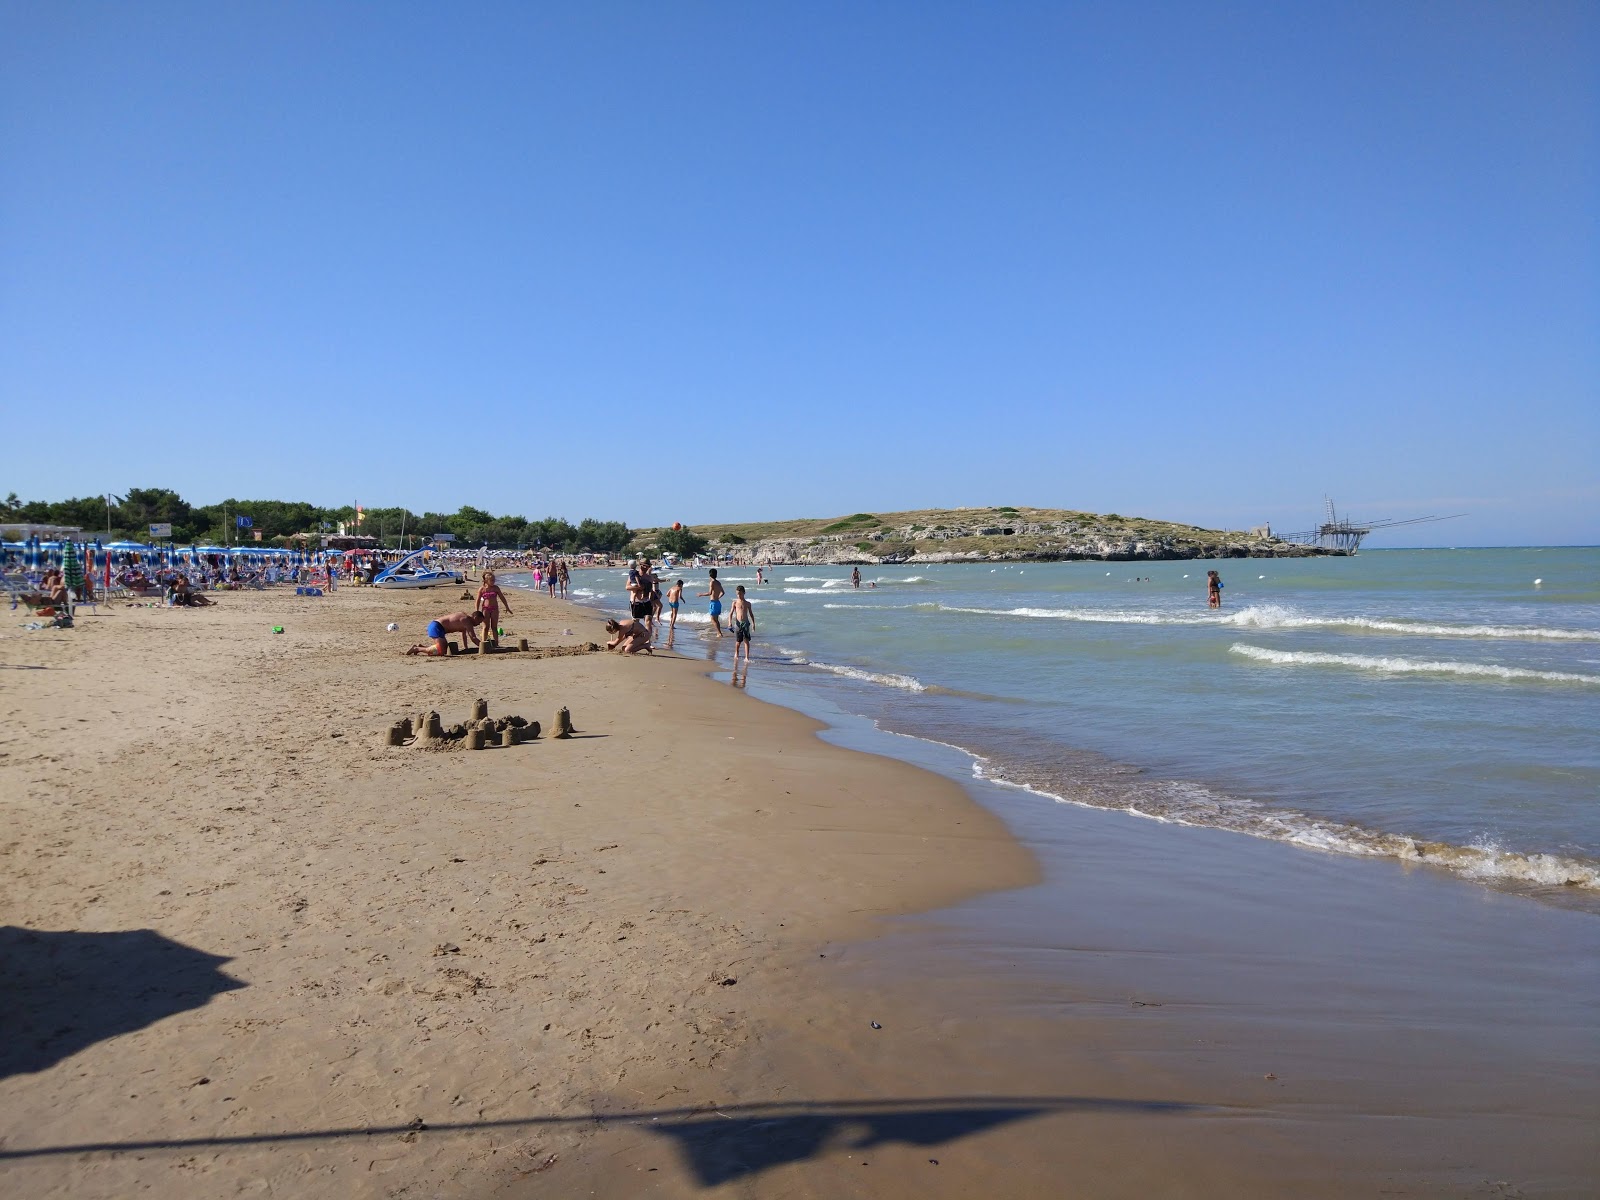 Spiaggia di Molinella'in fotoğrafı geniş ile birlikte